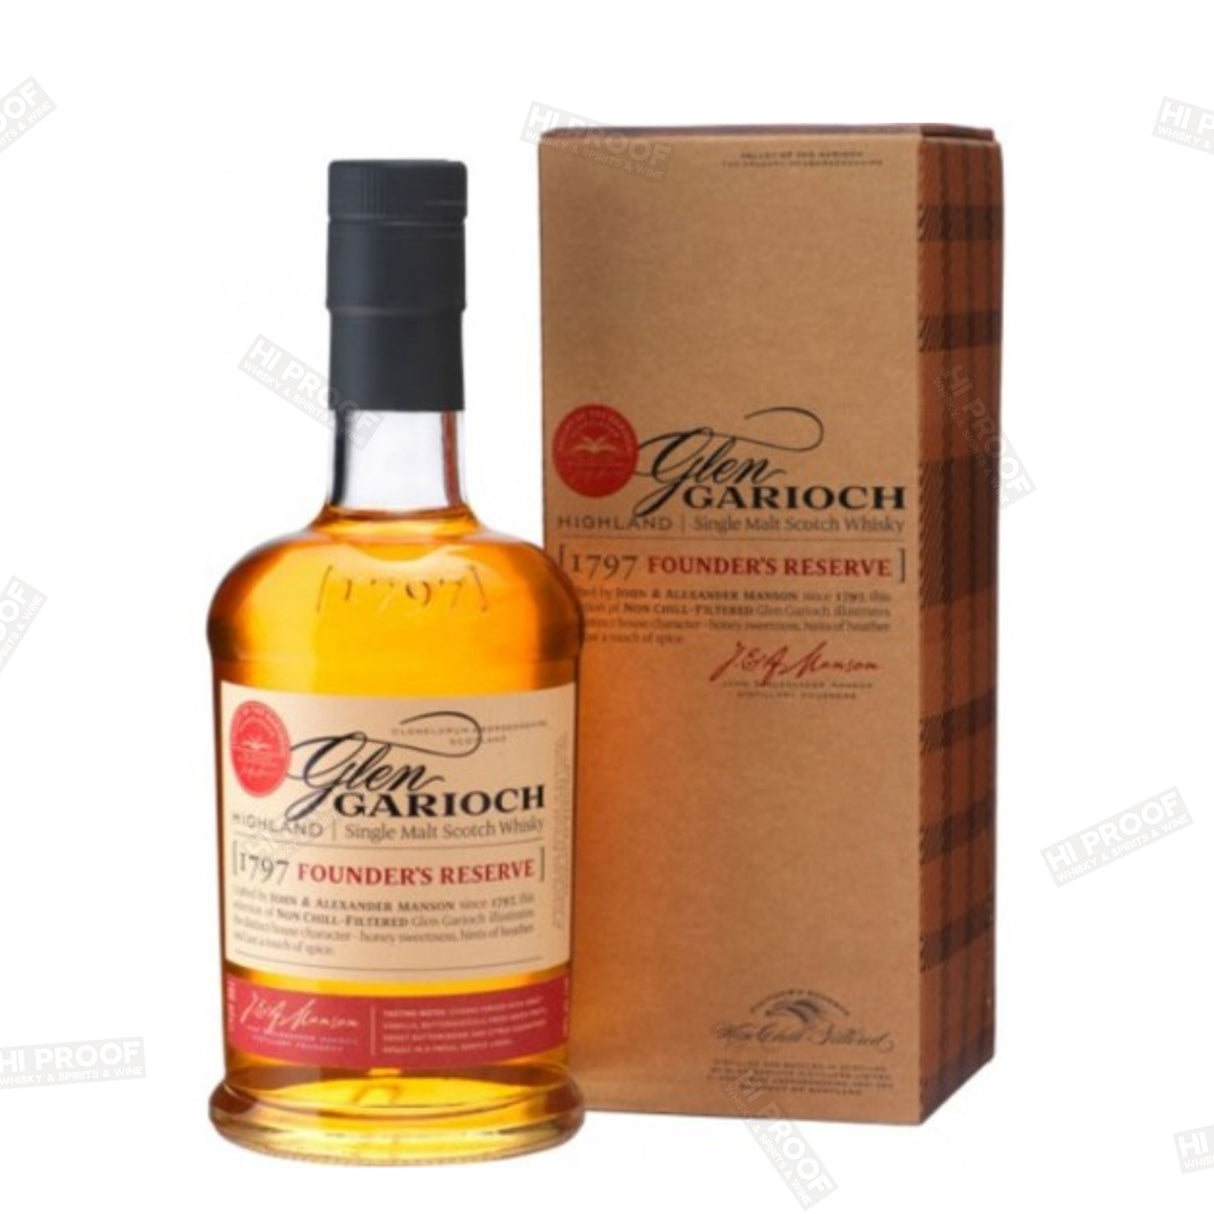 Glen Garioch 1797 Founder's Reserve Single Malt Scotch Whisky